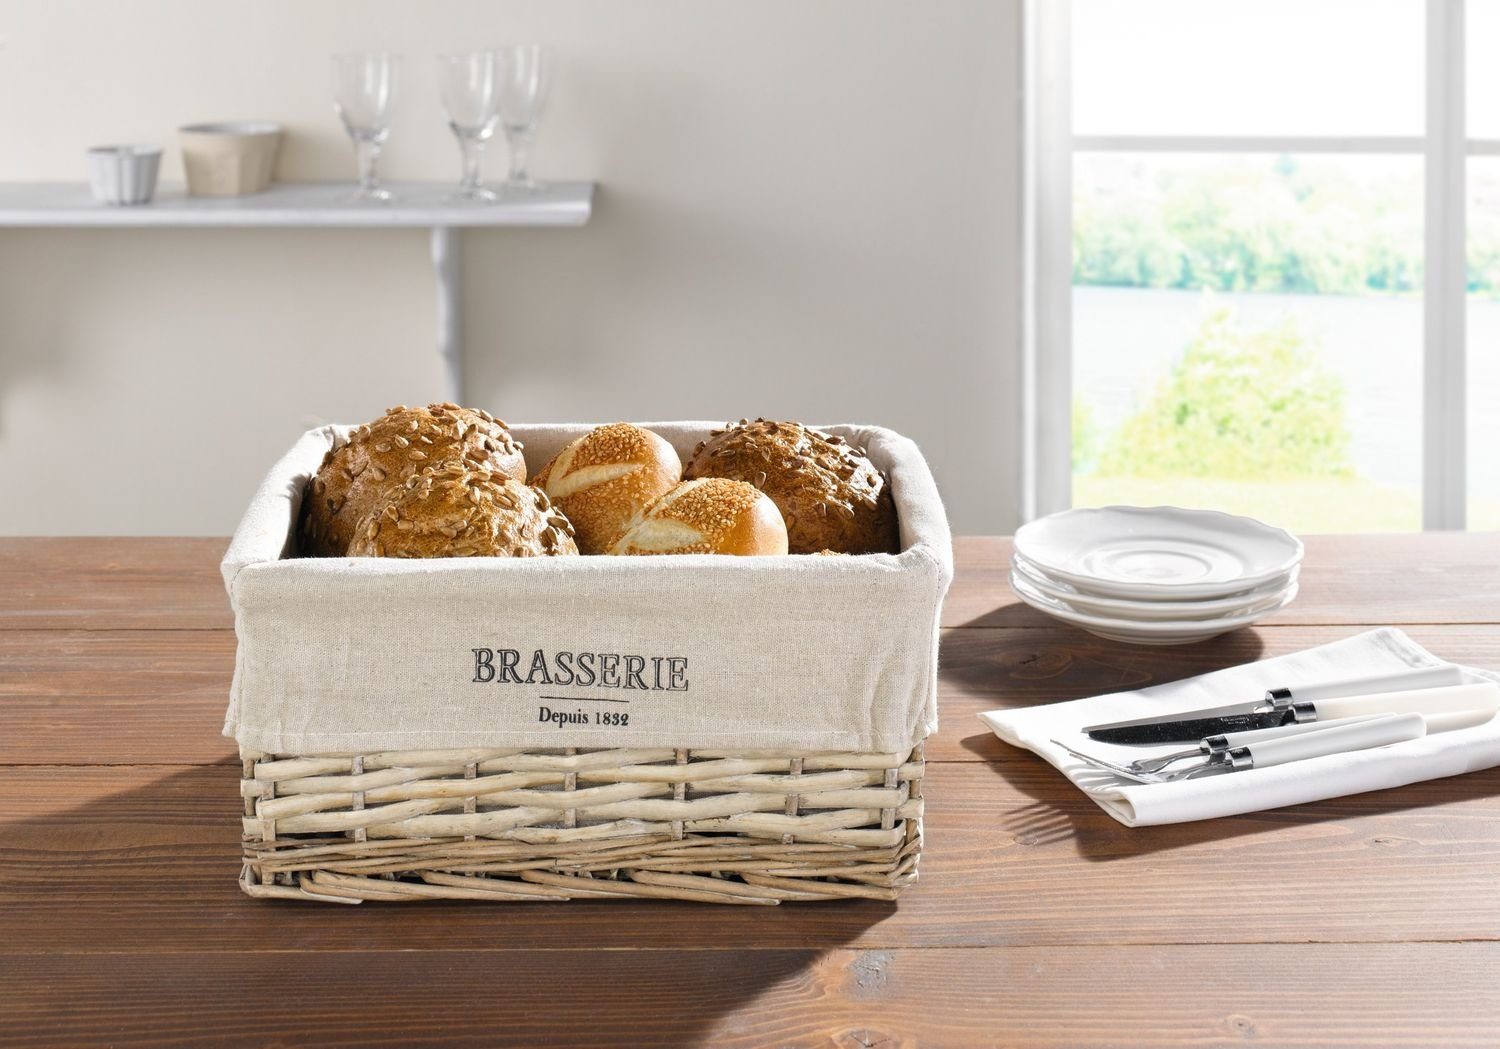 HomeLiving "Brasserie" Dekokorb